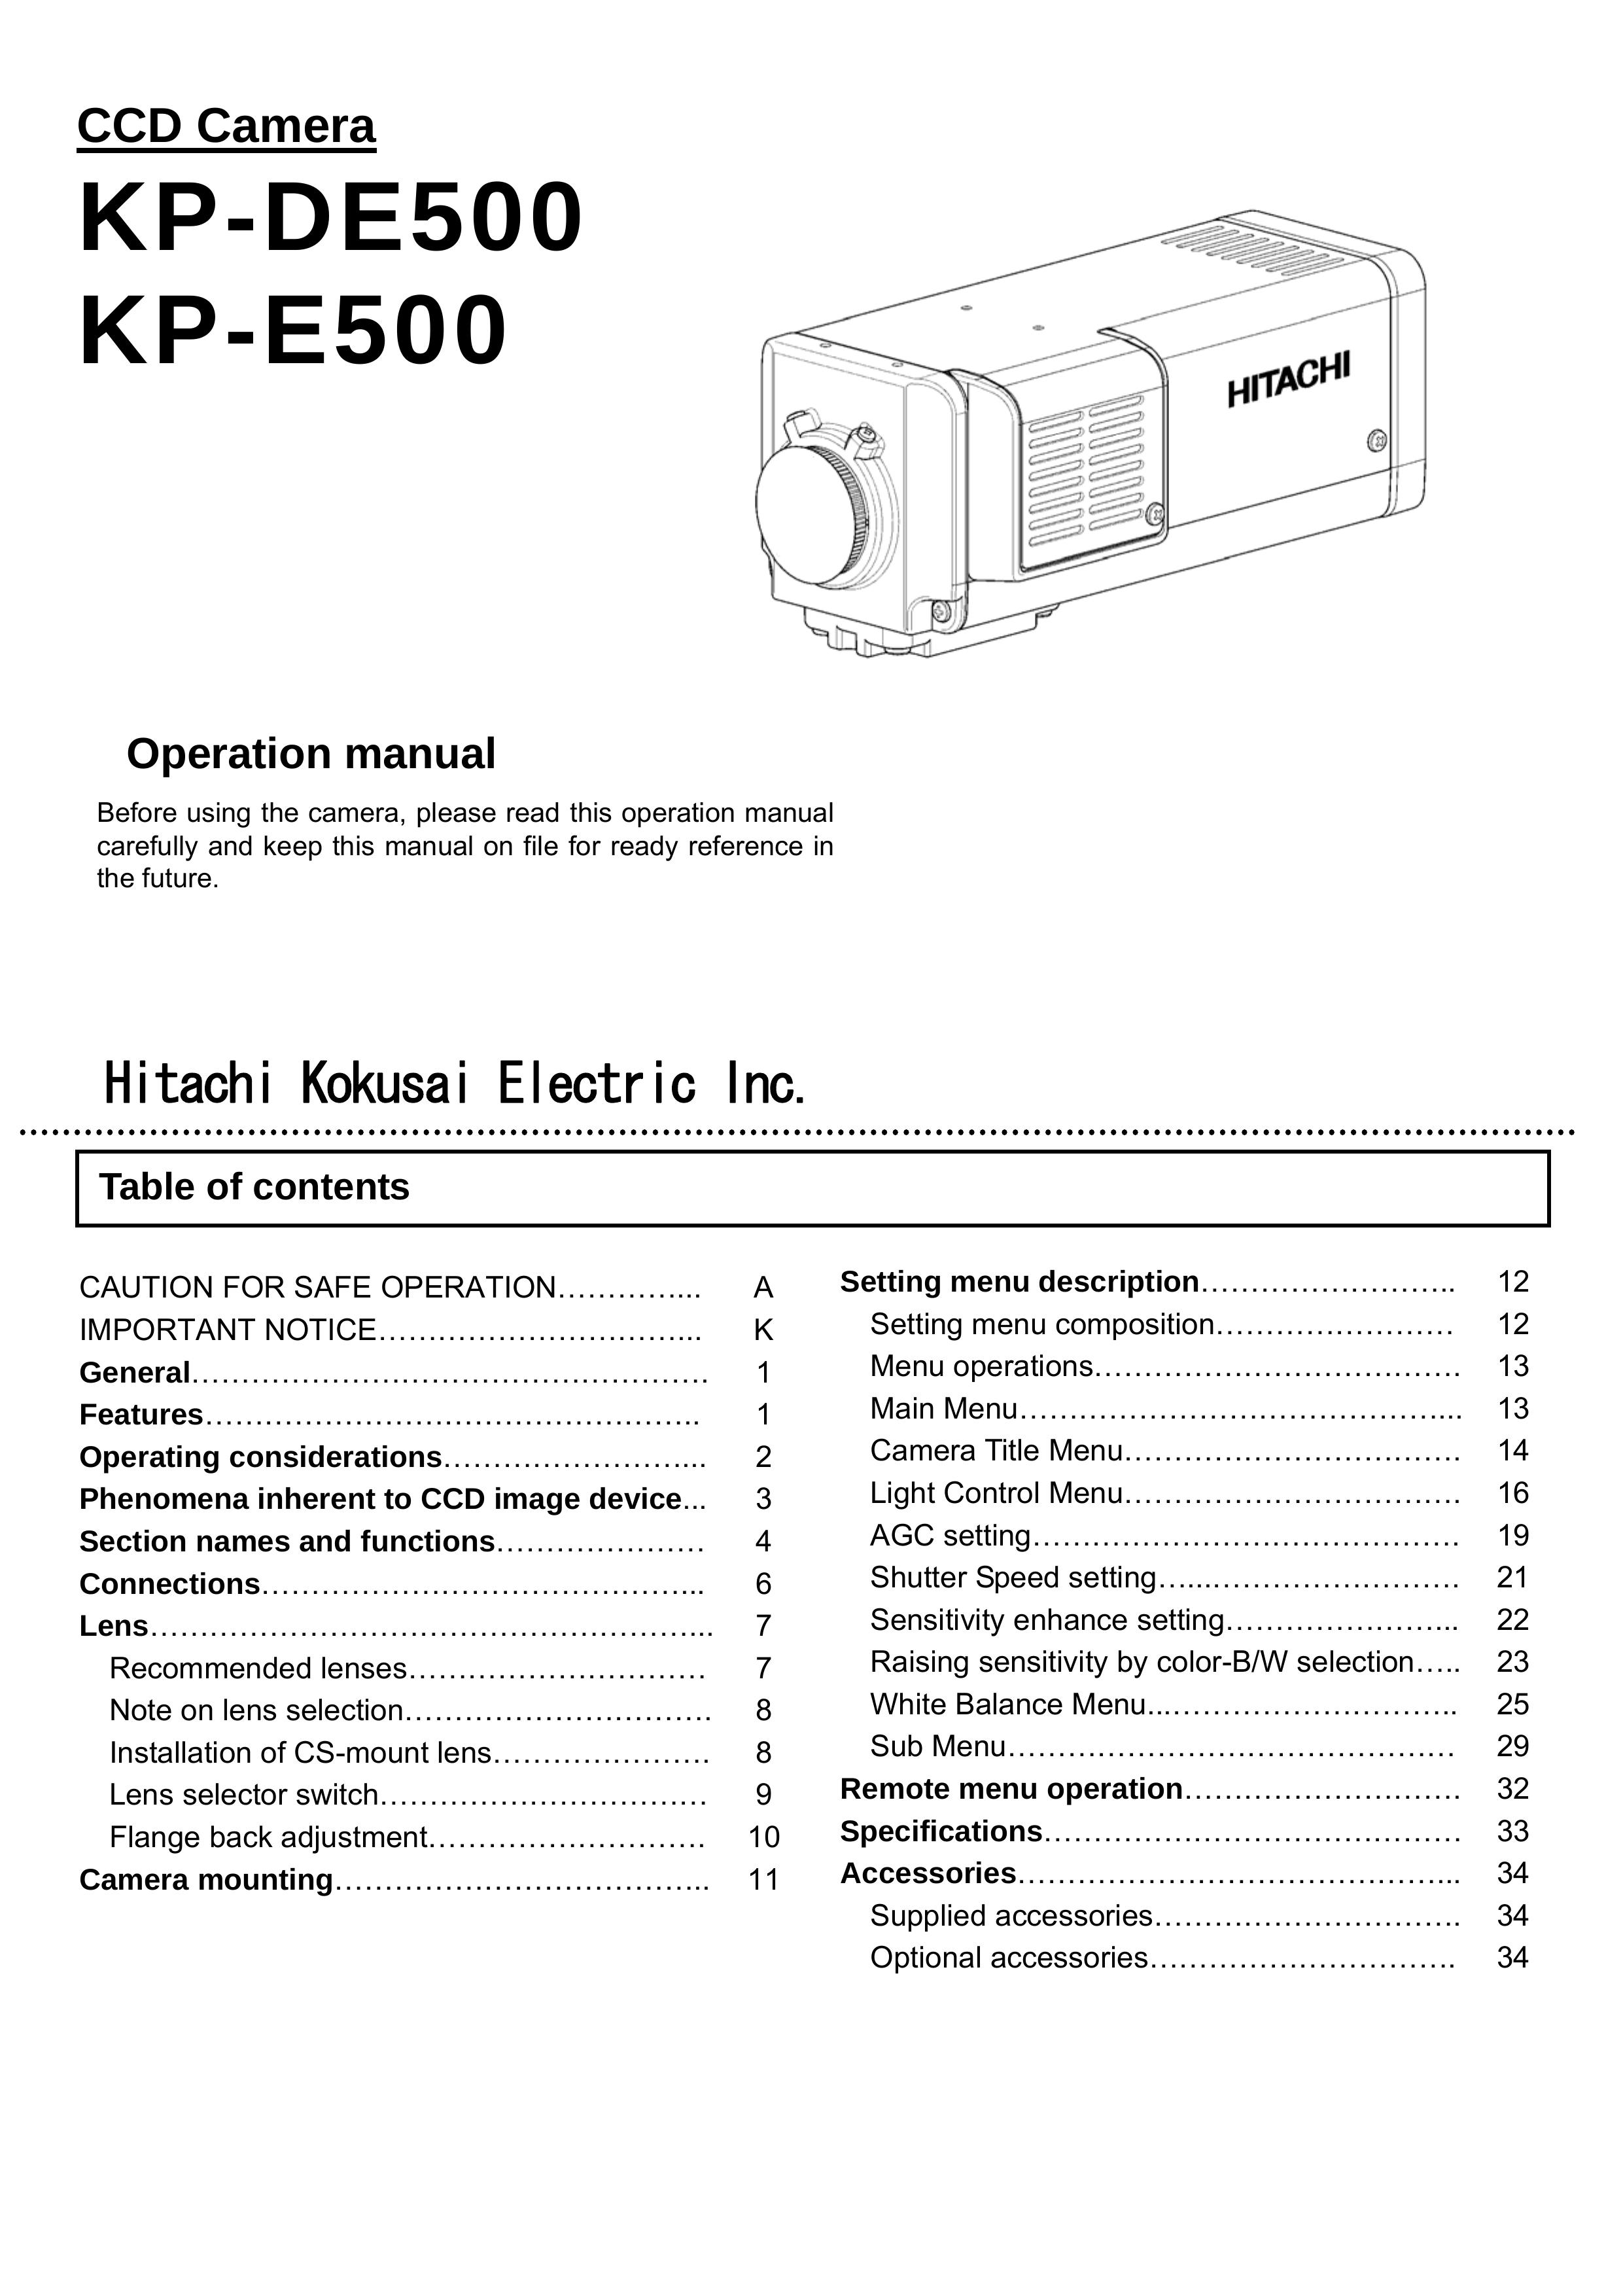 Hitachi KP-DE500 Security Camera User Manual